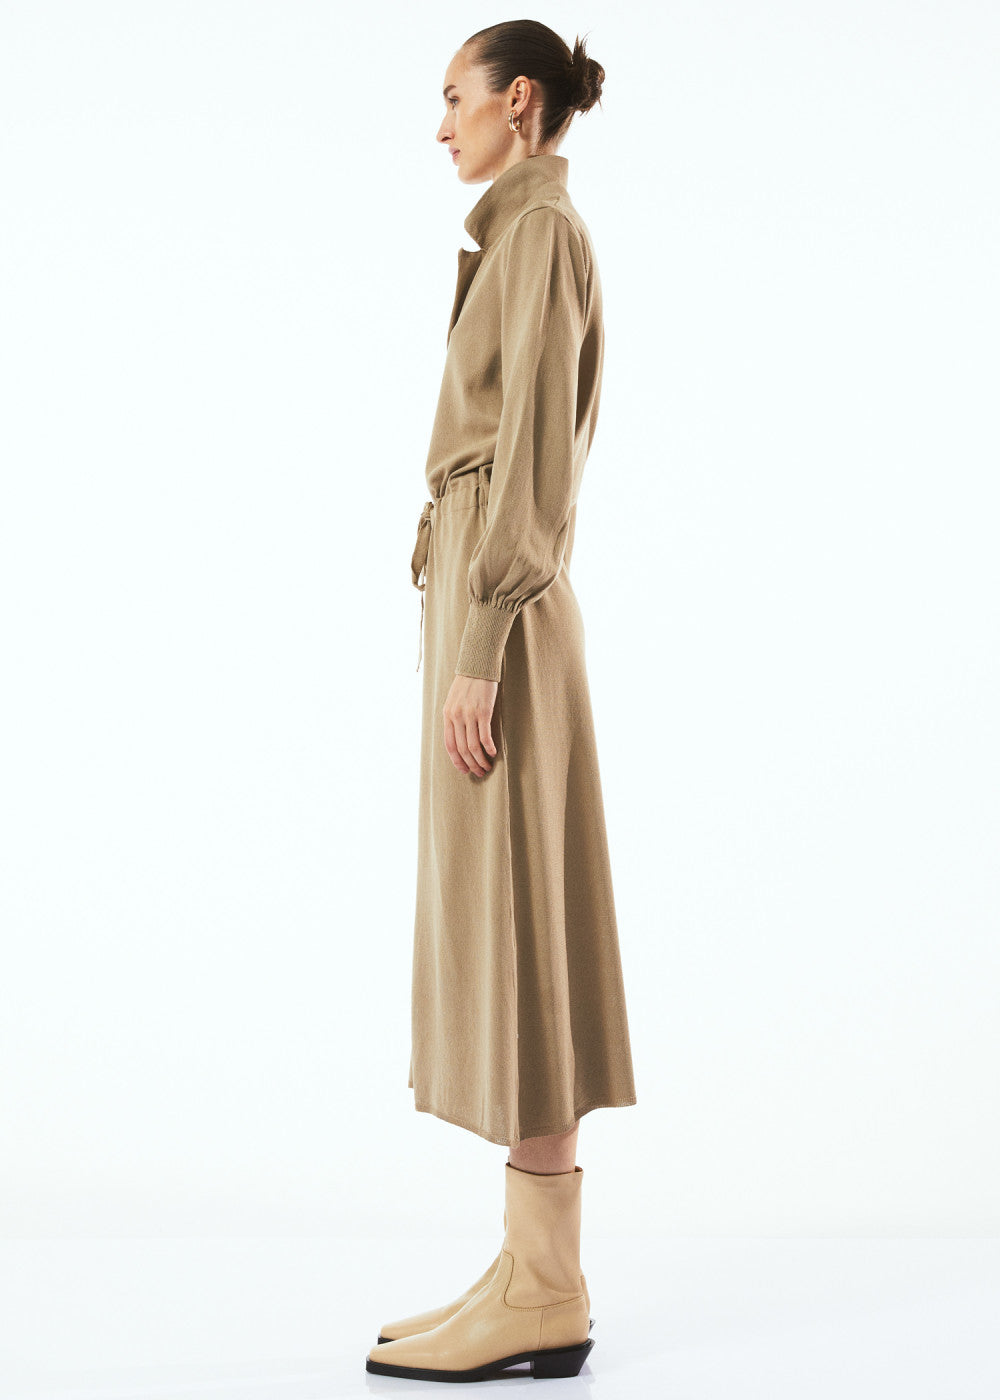 Buy Camel Knitwear Shirt Dress by BYNES NEW YORK | Apparel & Accessories